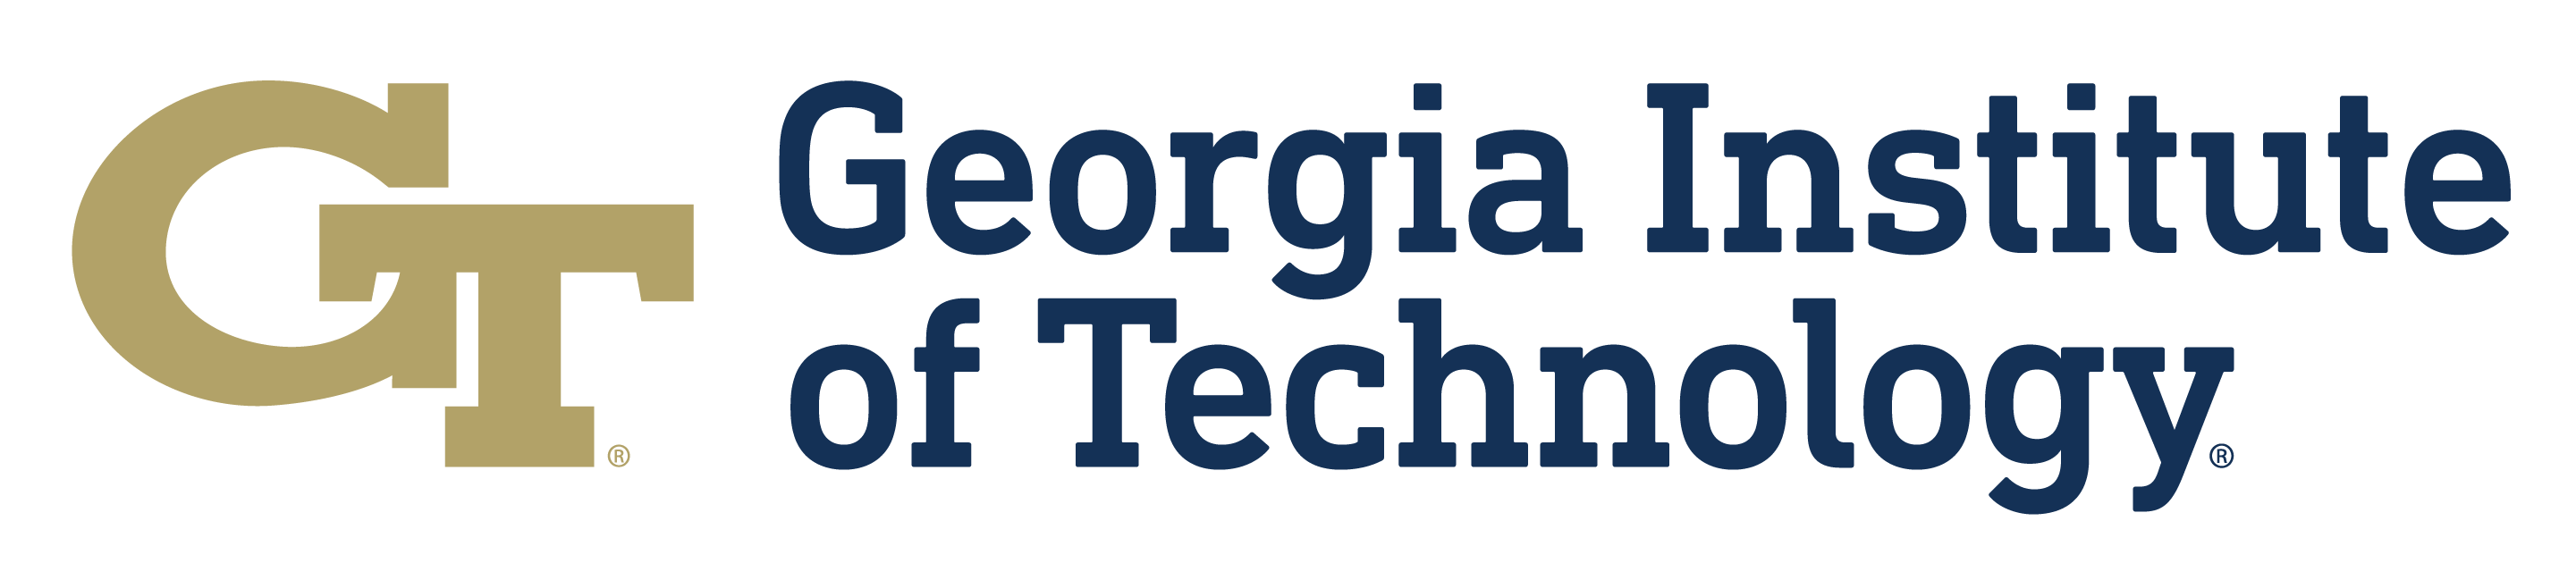 Georgia Tech Logo PNG Image File